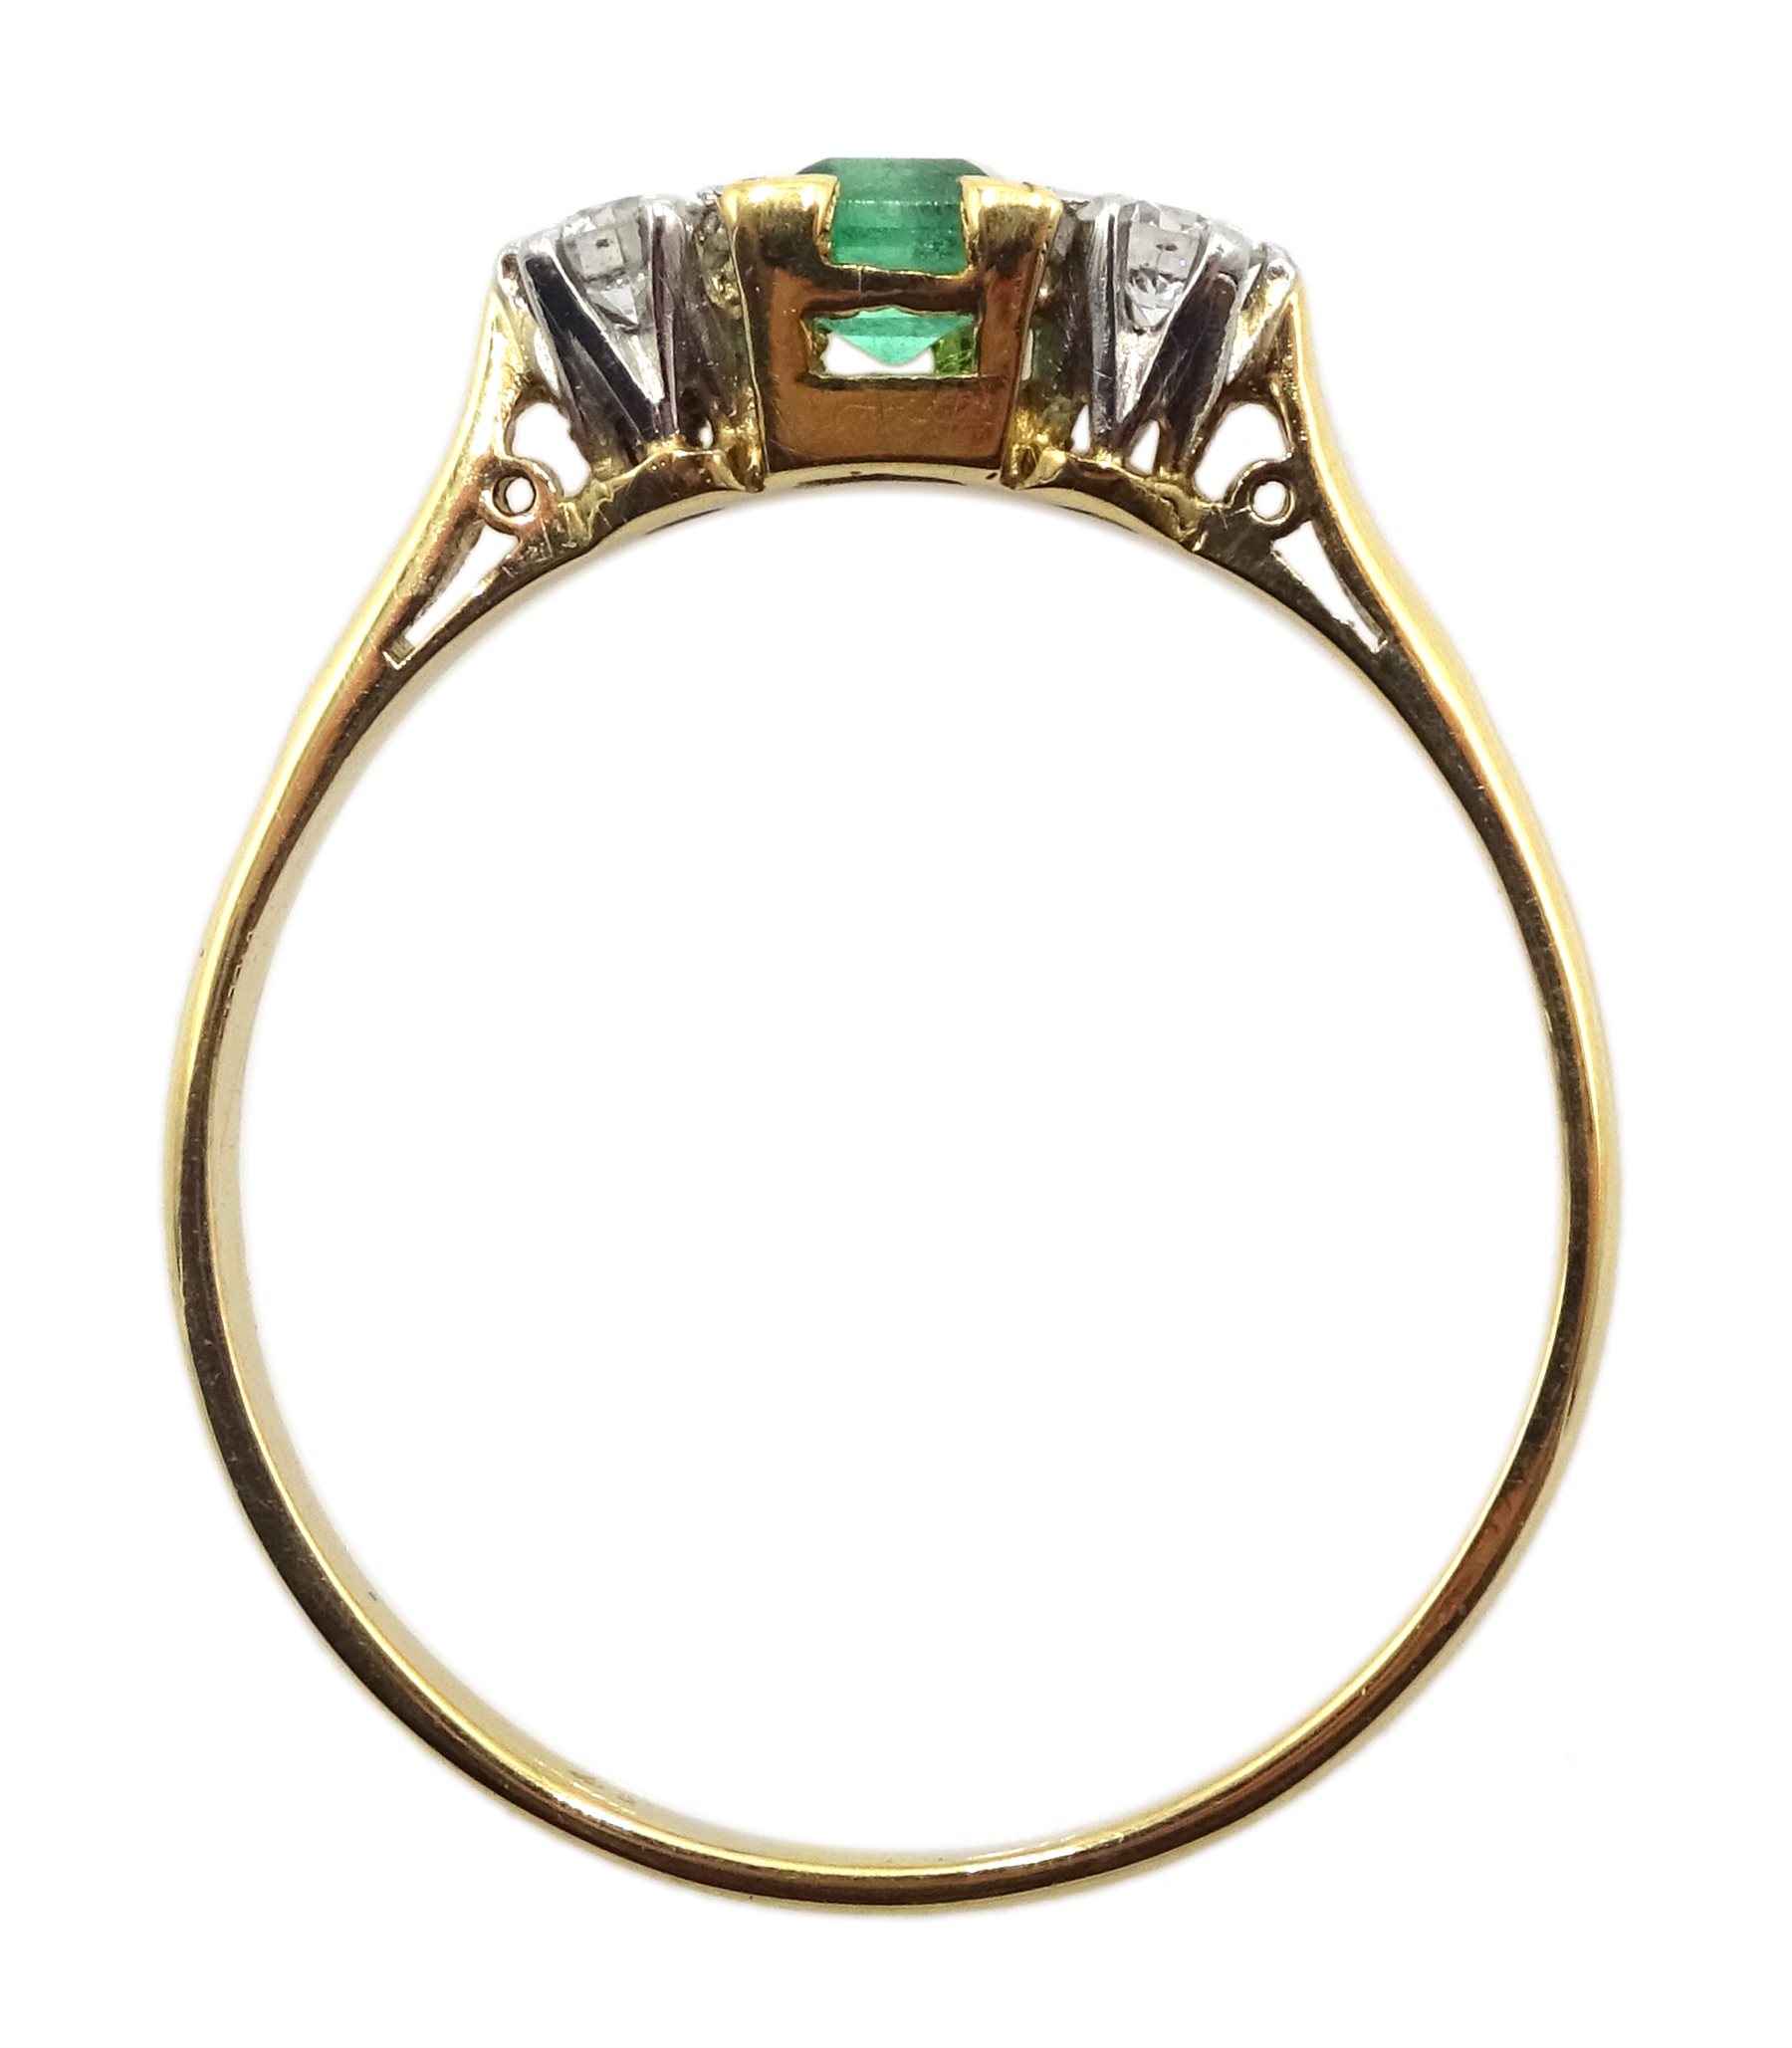 18ct gold three stone emerald and diamond ring - Image 4 of 4